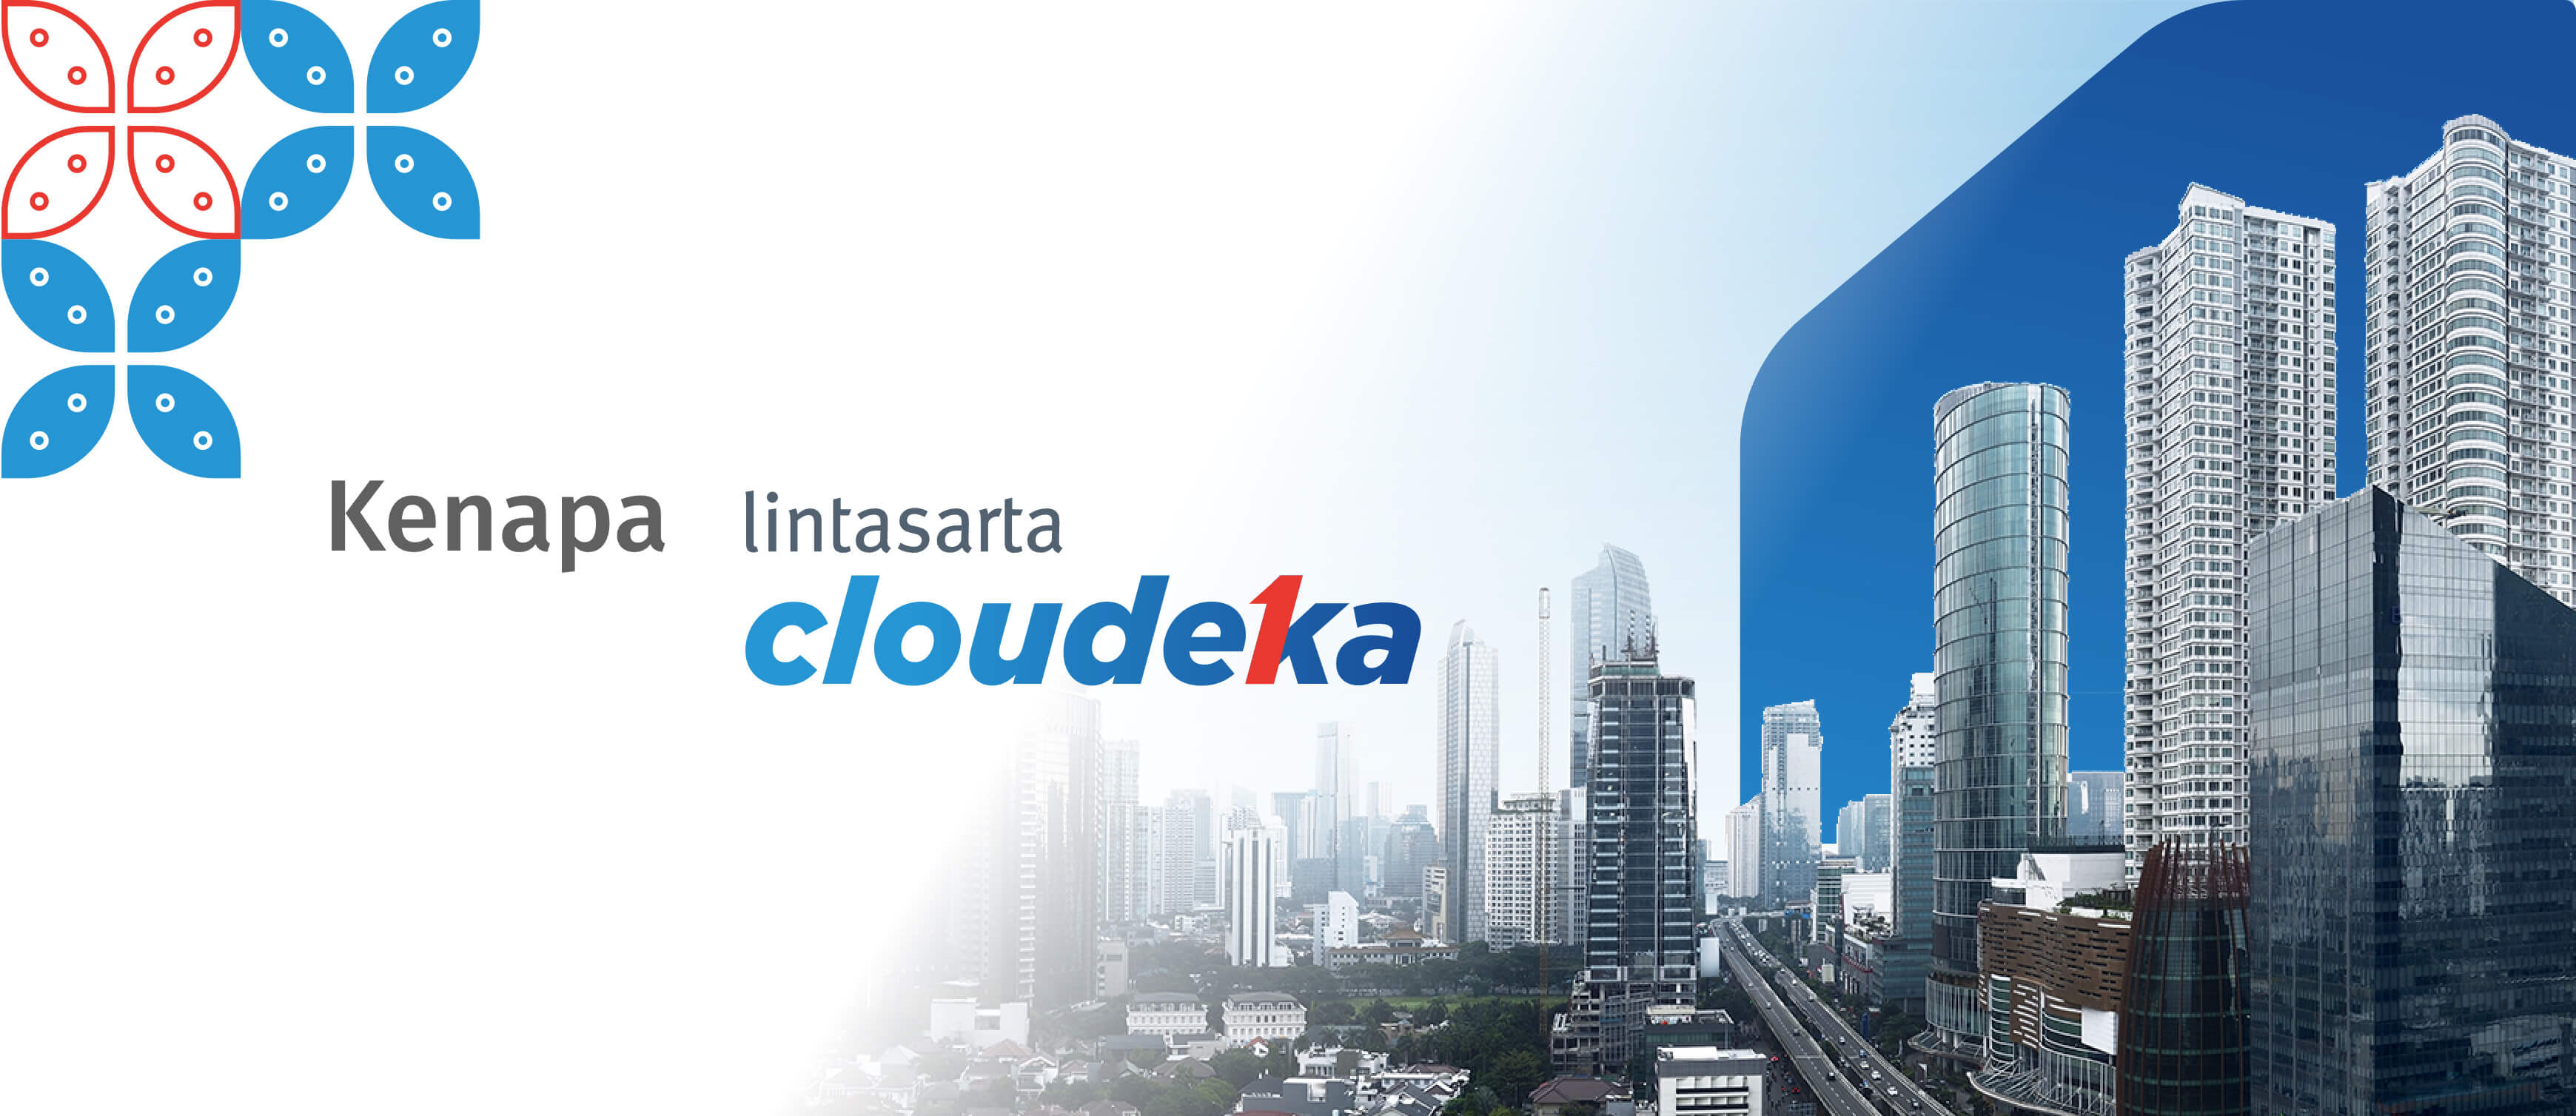 Why Lintasarta cloud